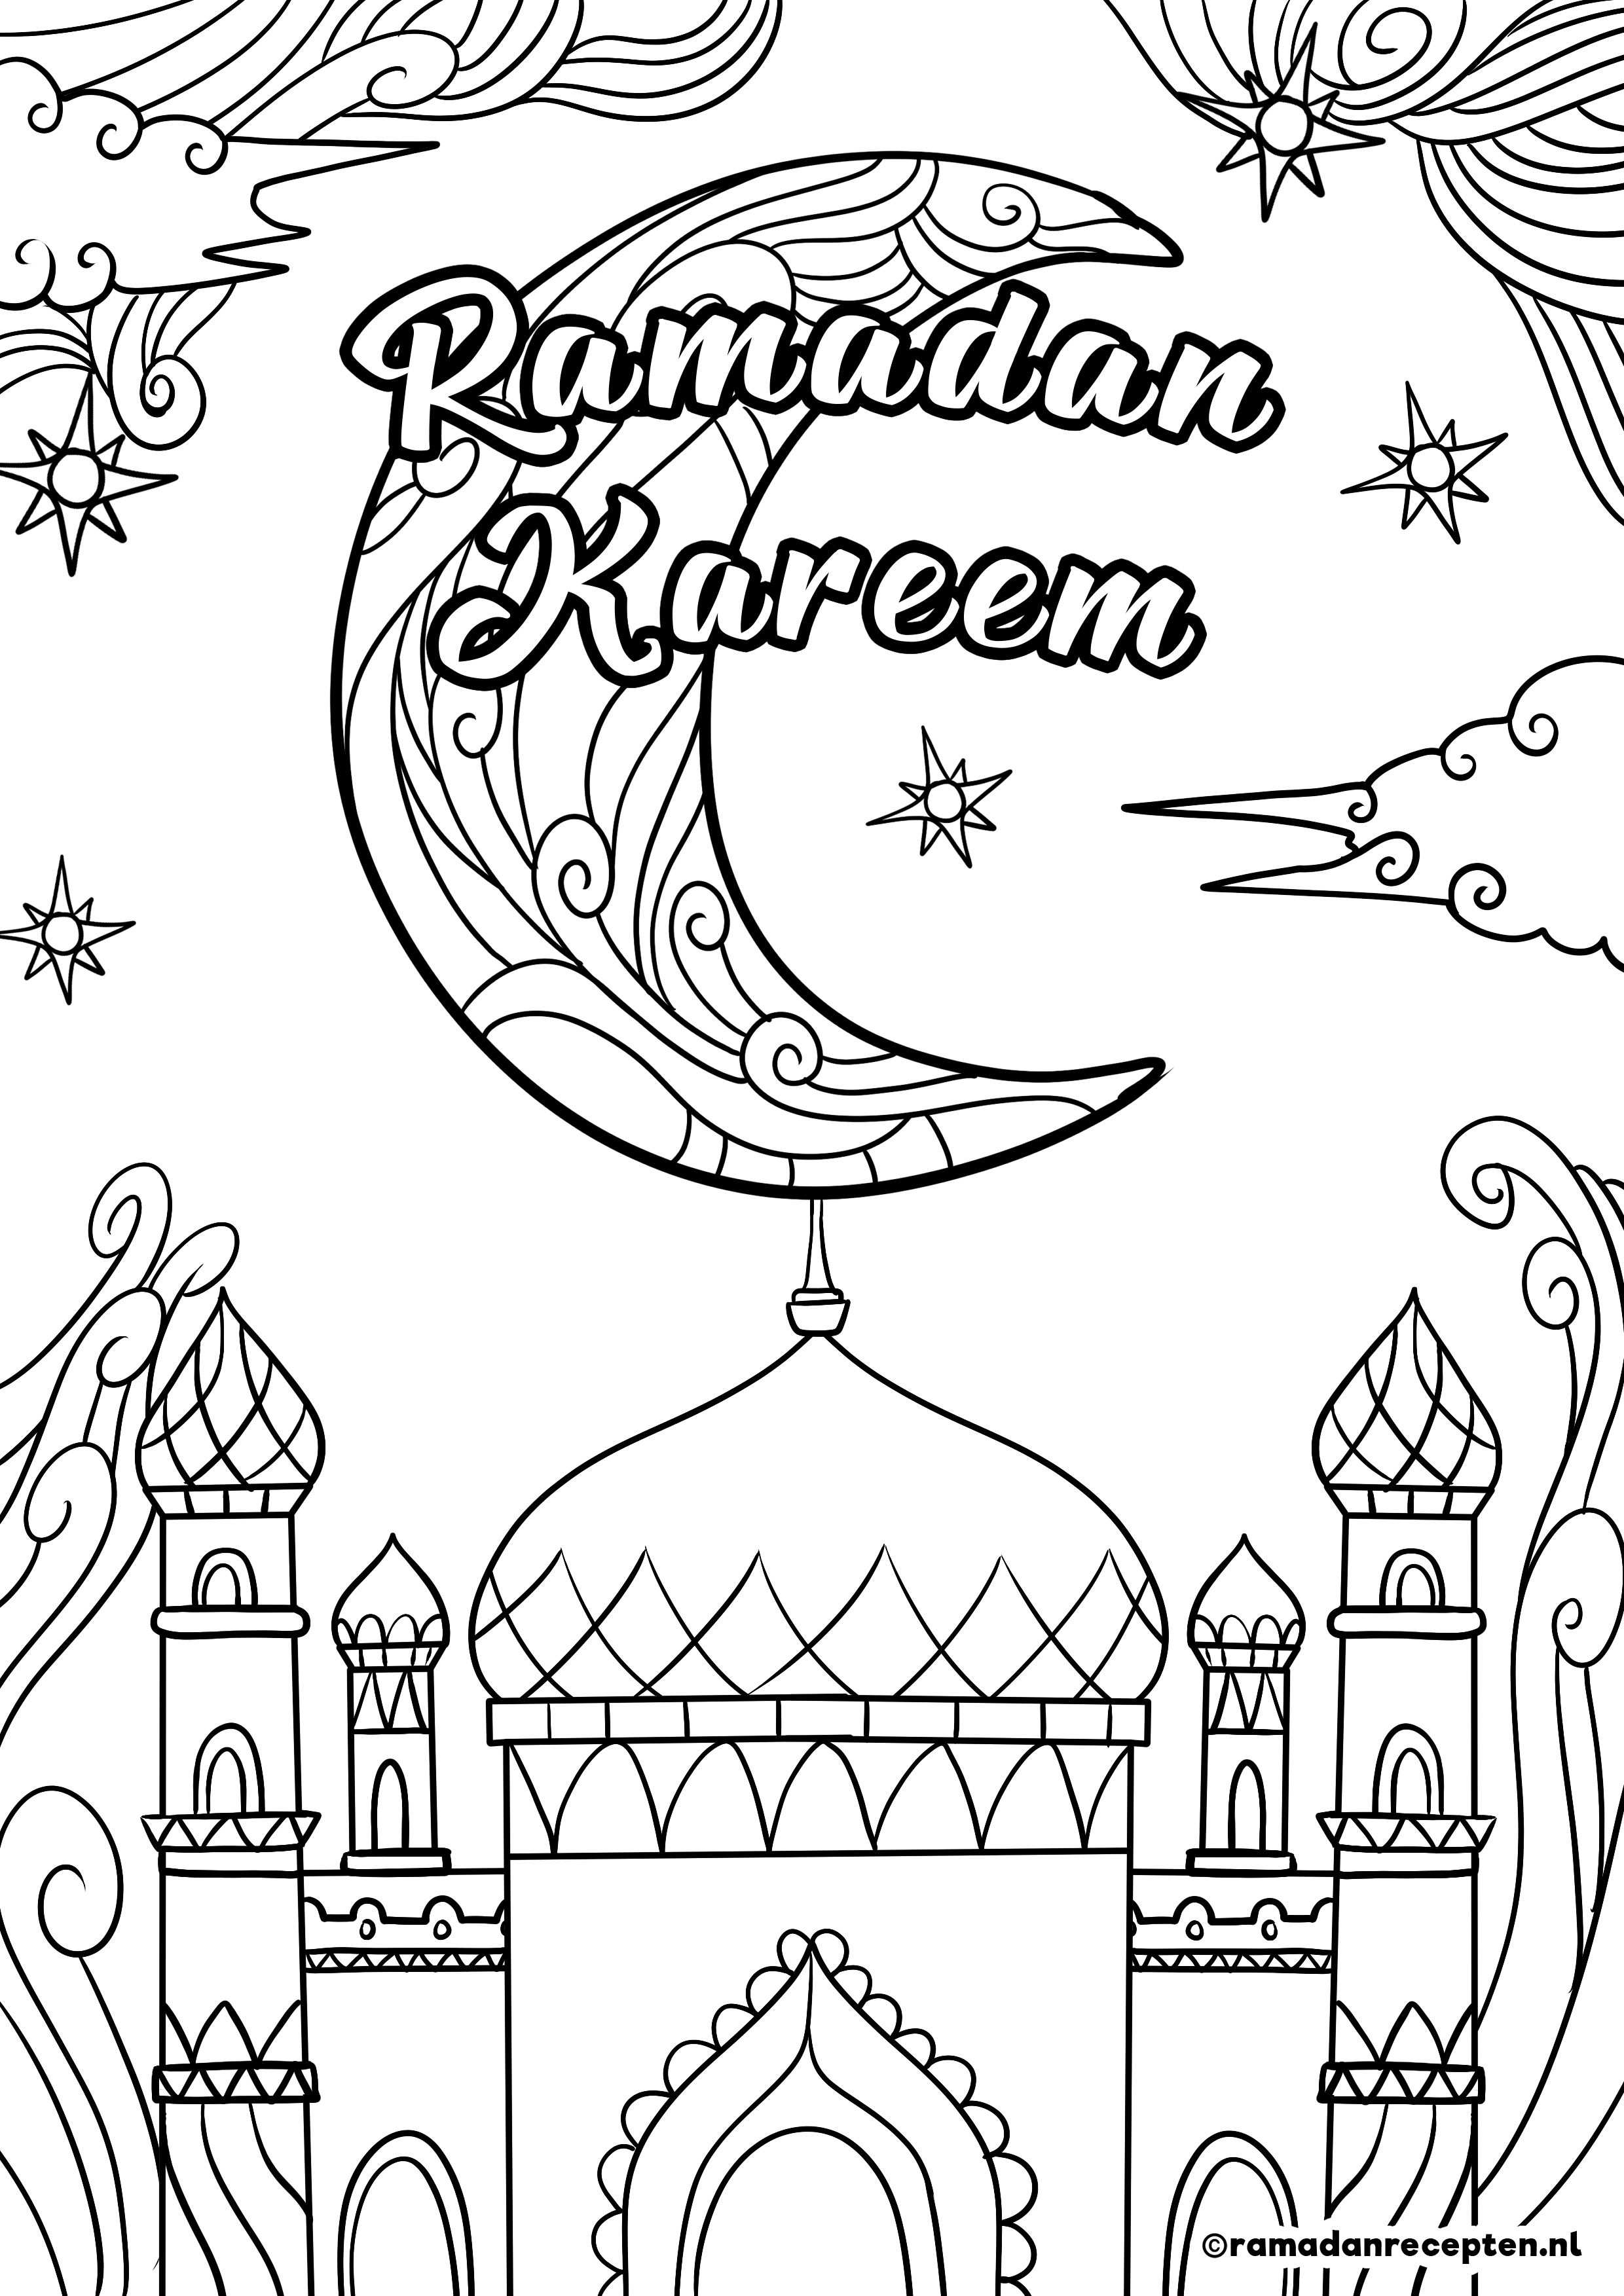 Freebie With Images Ramadan Activities Ramadan Kids Ramadan